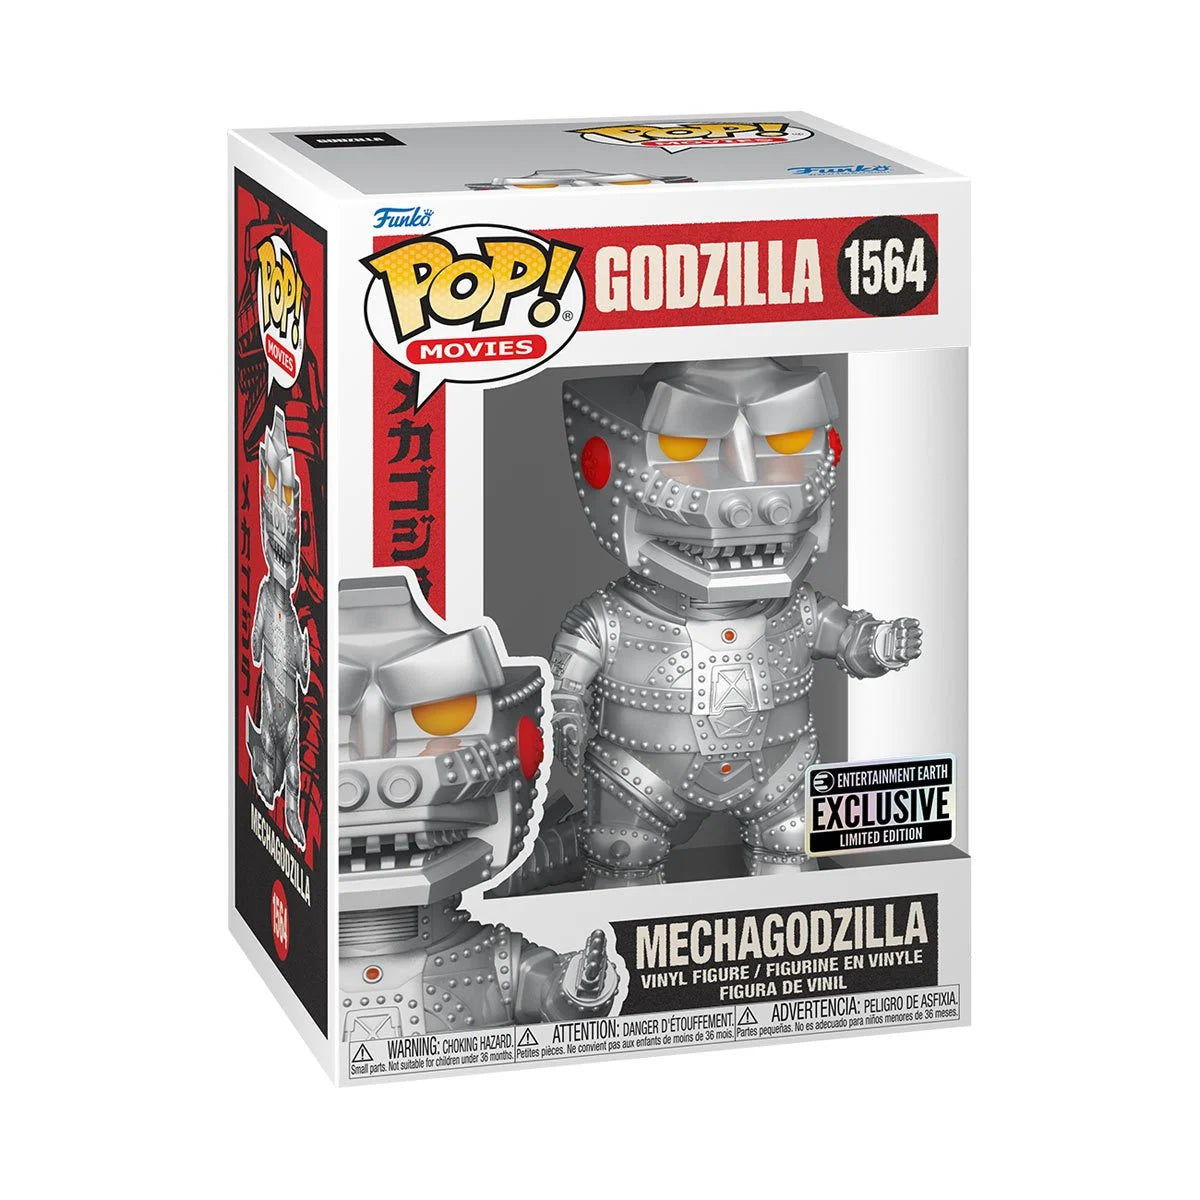 Godzilla Mechagodzilla Funko Pop! Vinyl Figure #1564 - Entertainment Earth Exclusive Funko